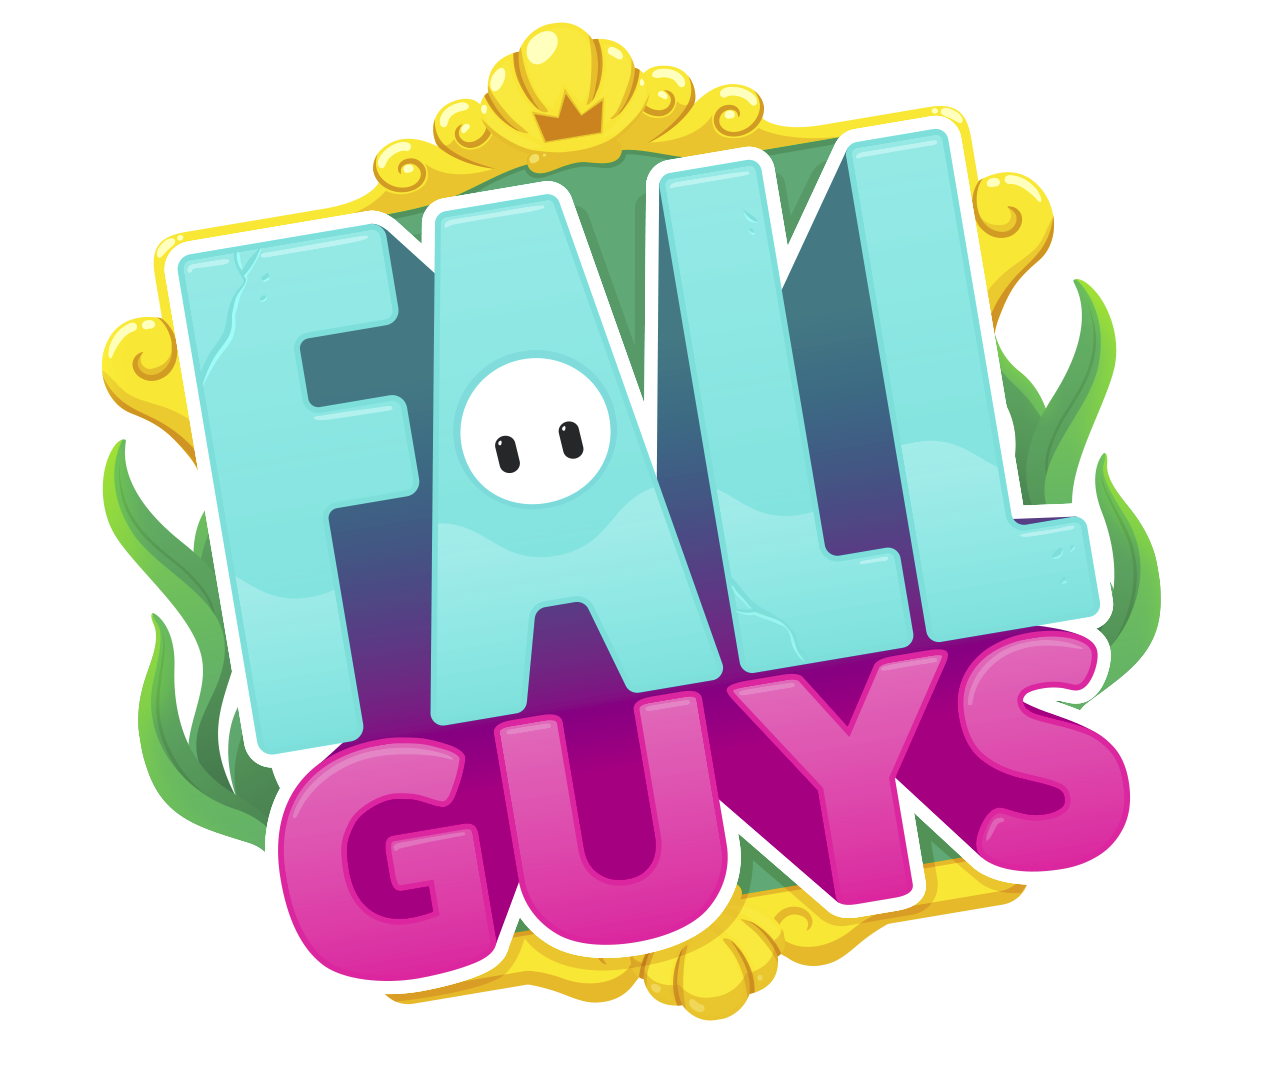 Fall Guys: Ultimate Knockout – logotyp